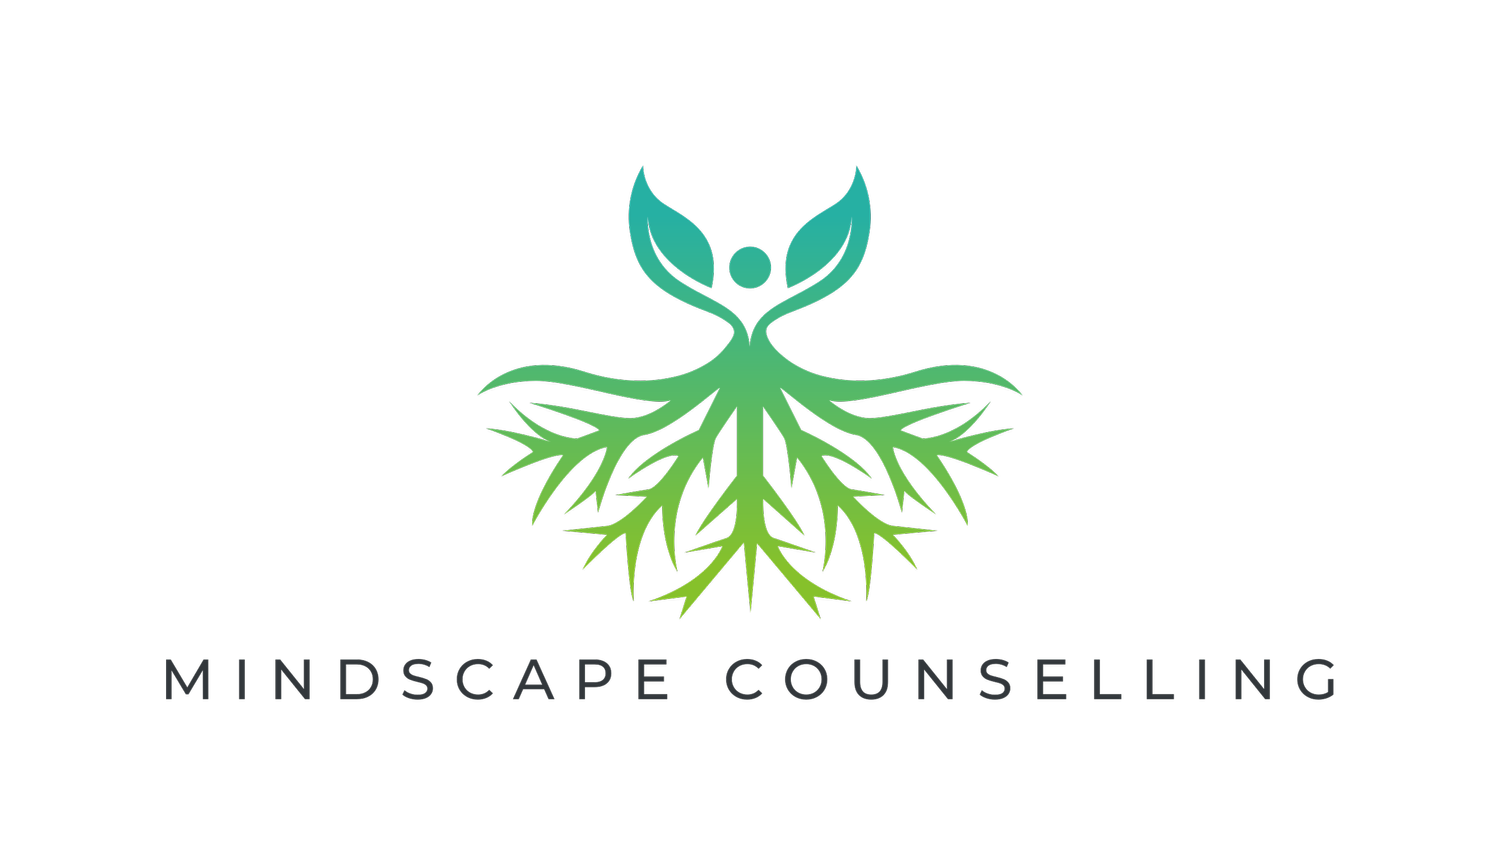 Mindscape Counselling